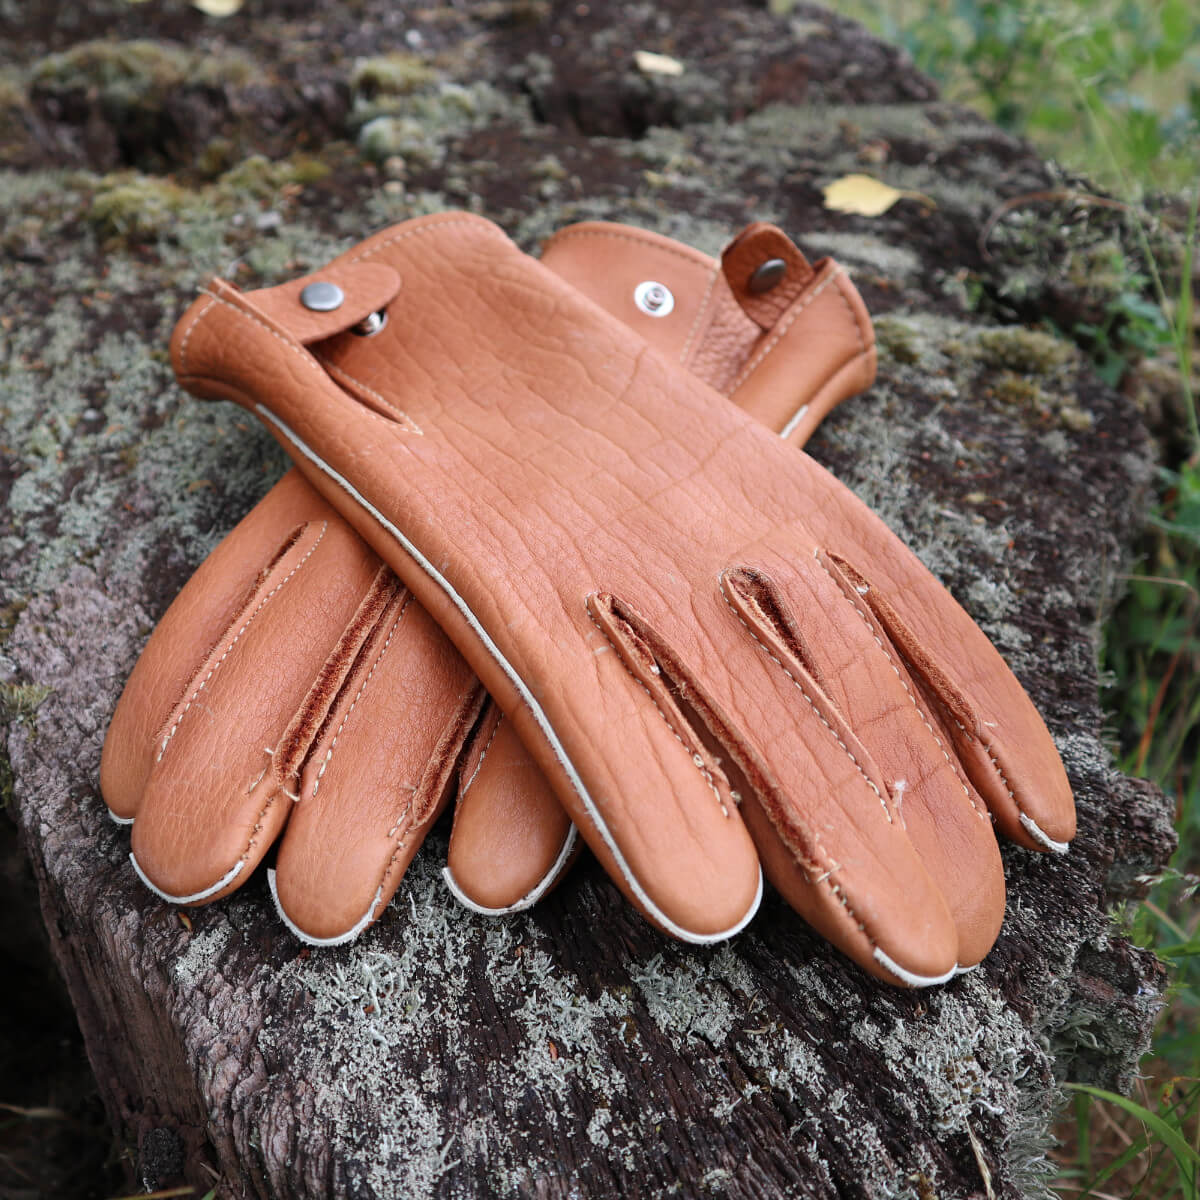 Geier American Bison Cowboy Gloves | Western Gloves | Made in the USA